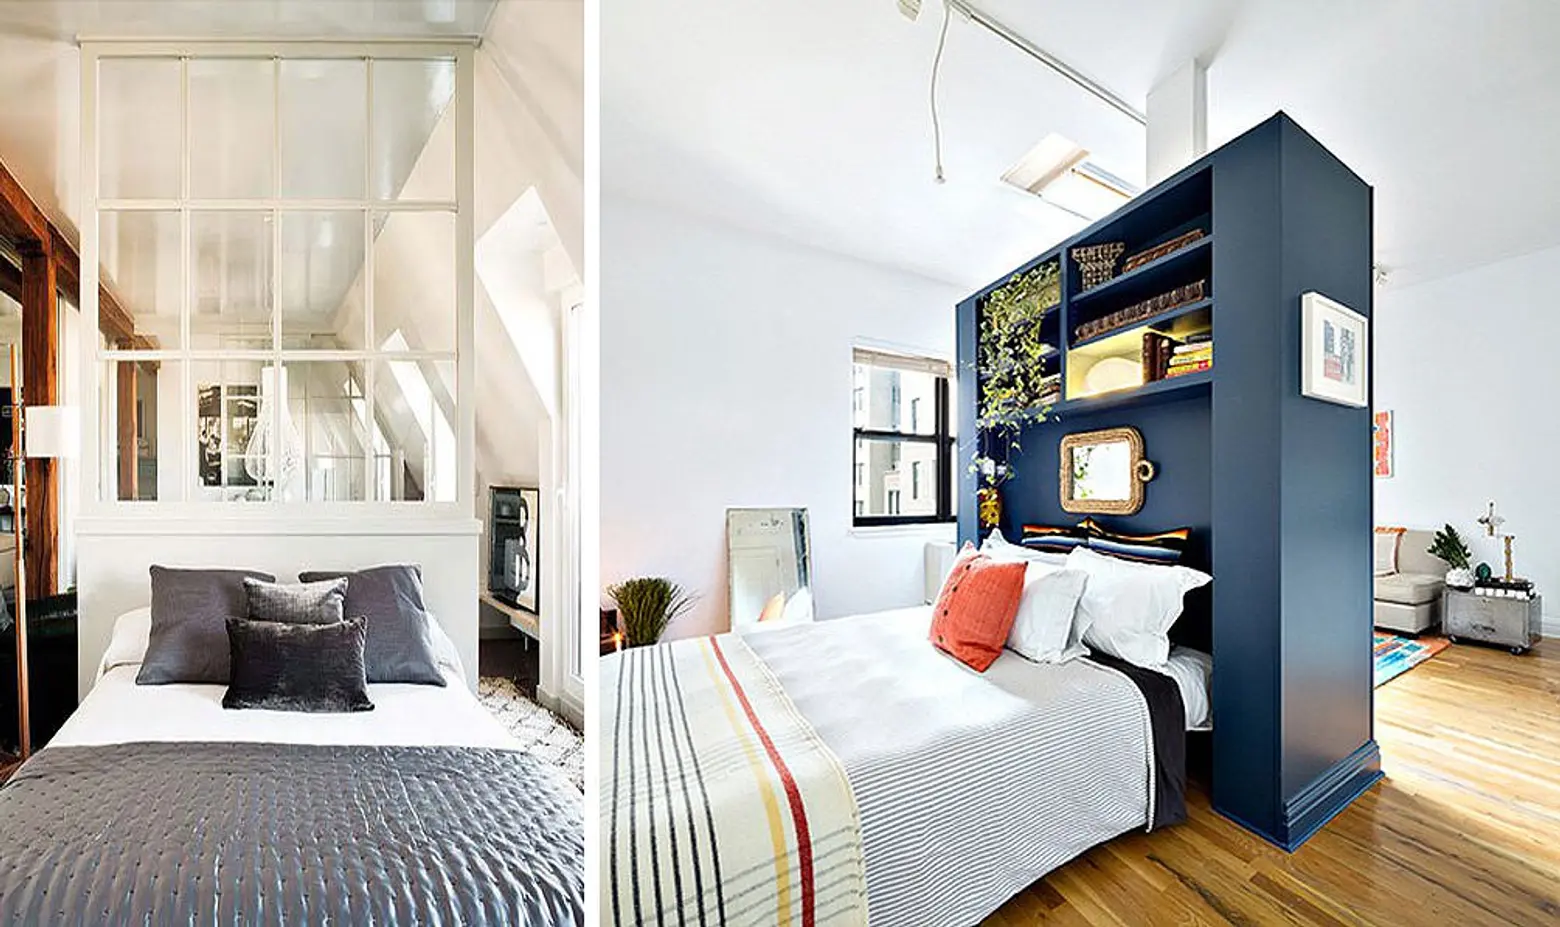 5 Best Small Bedroom Storage Ideas (Practical & Renter-friendly) - Life's  AHmazing!